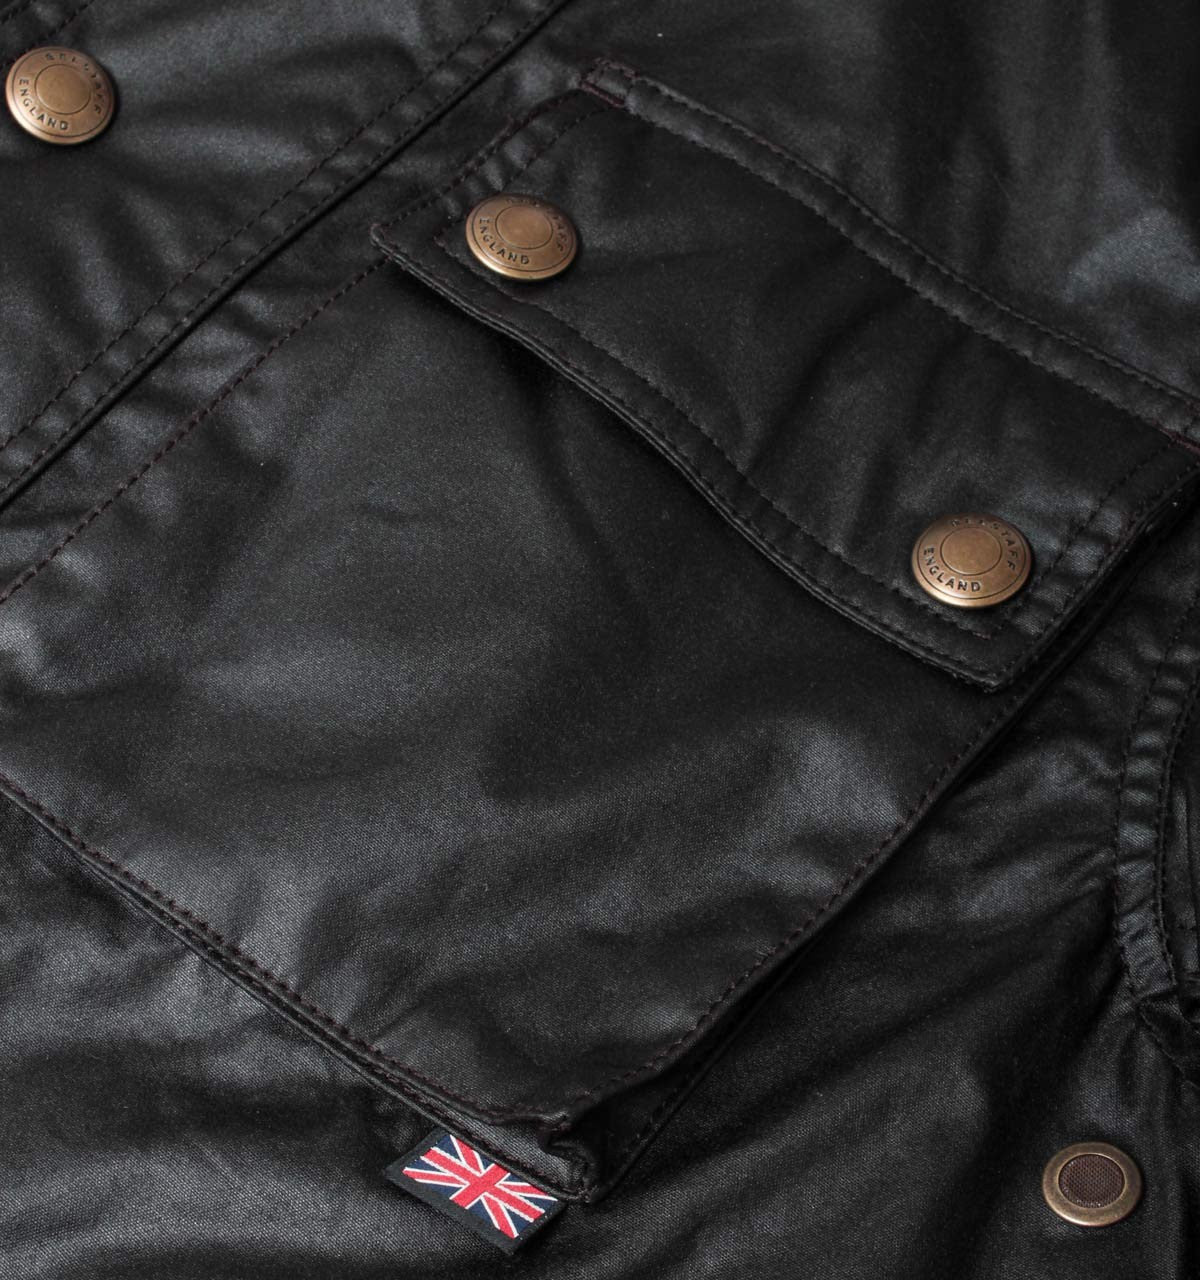 Buy Womens Vintage Belstaff Jacket Size 42 Online in India - Etsy